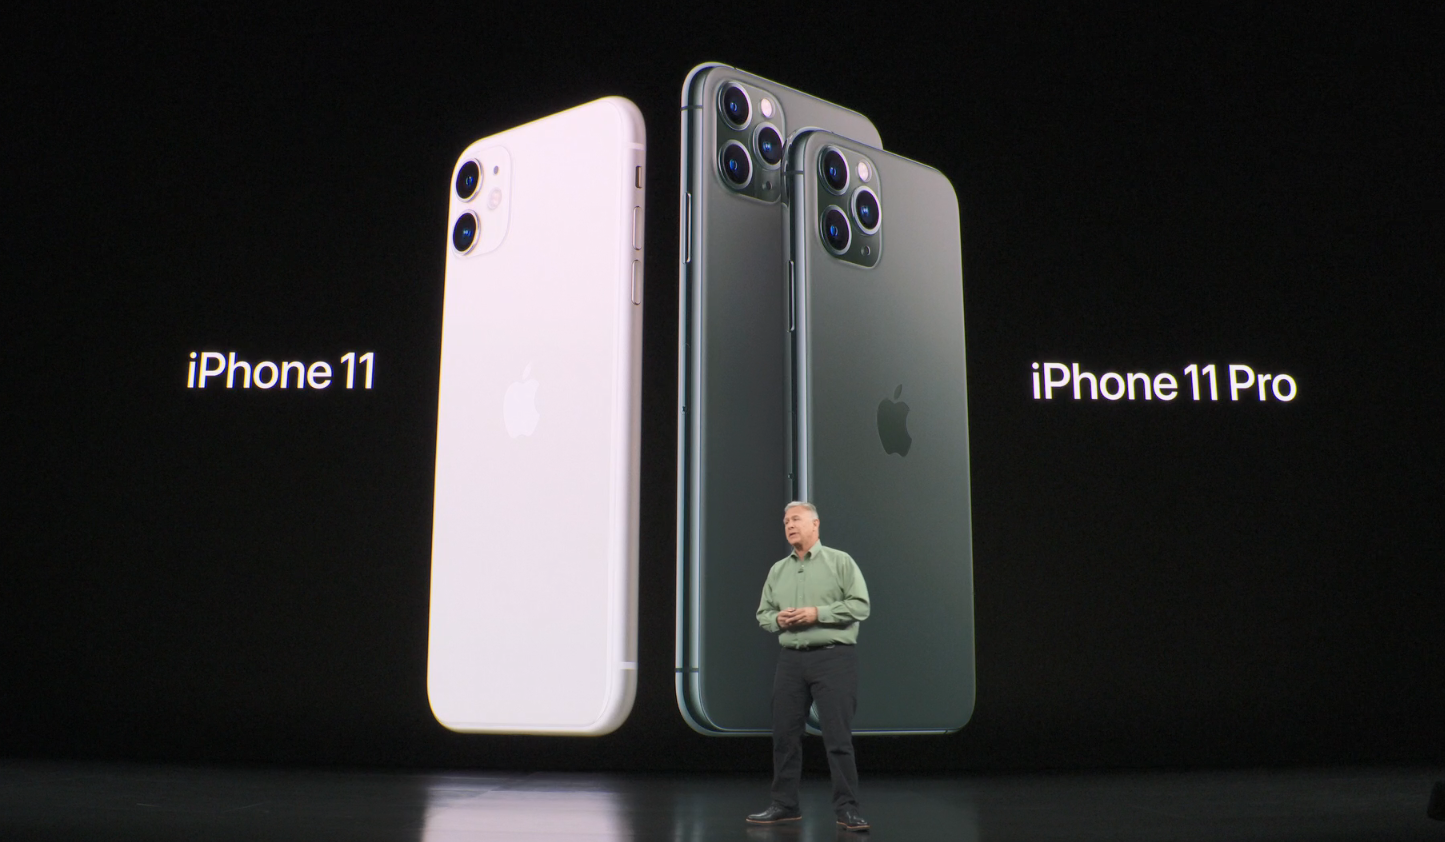     AppleiPhone 11 запущен во вторник